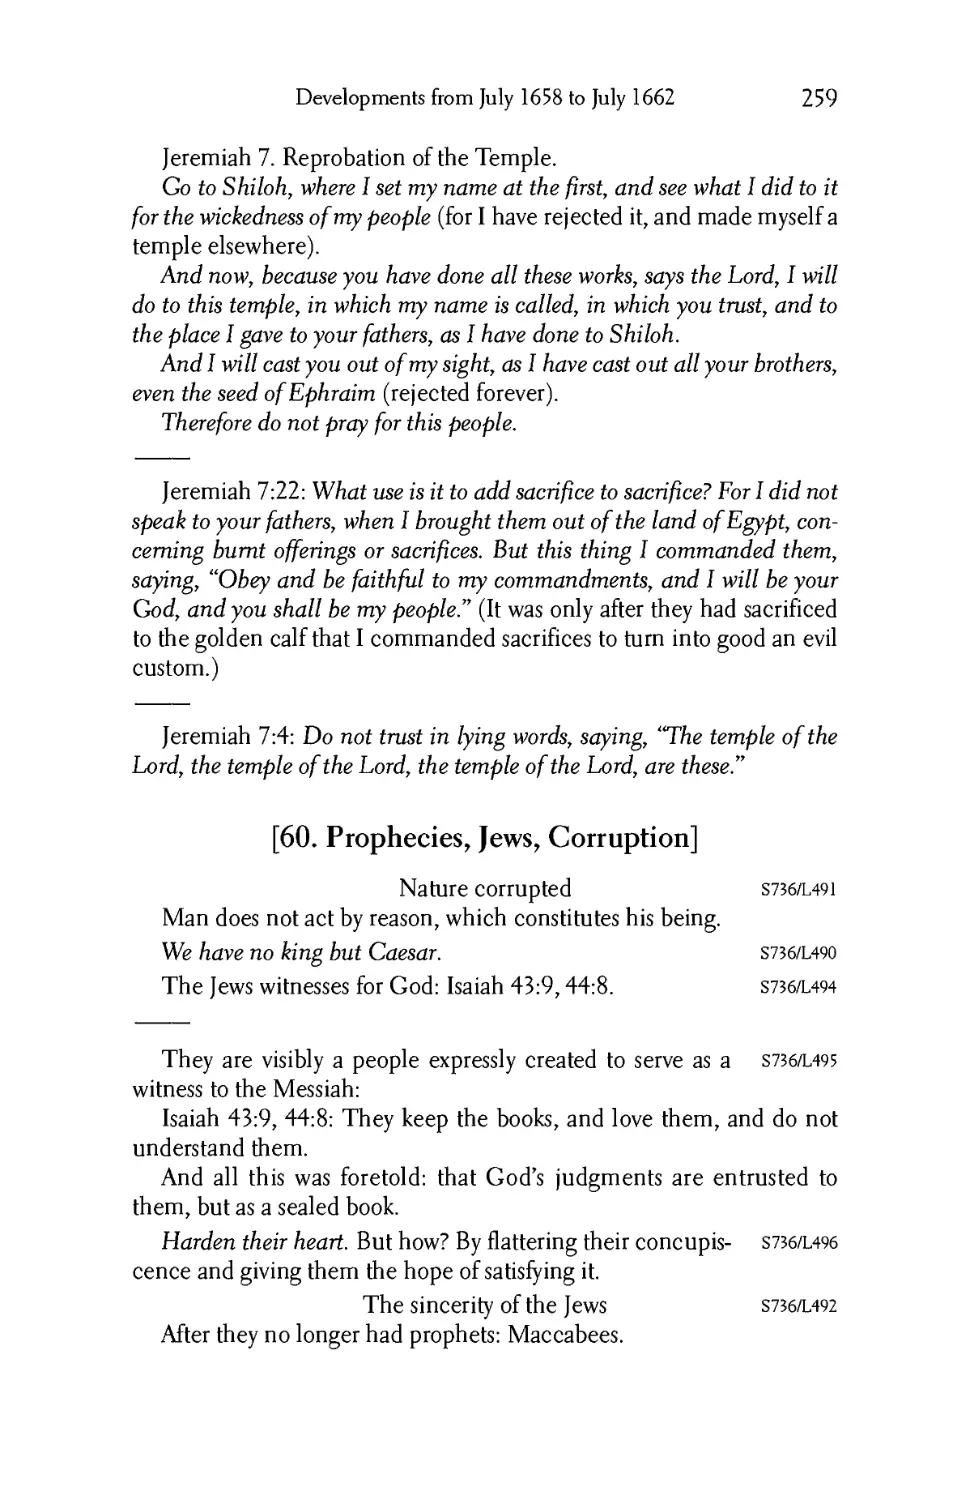 60. Prophecies, Jews, Corruption